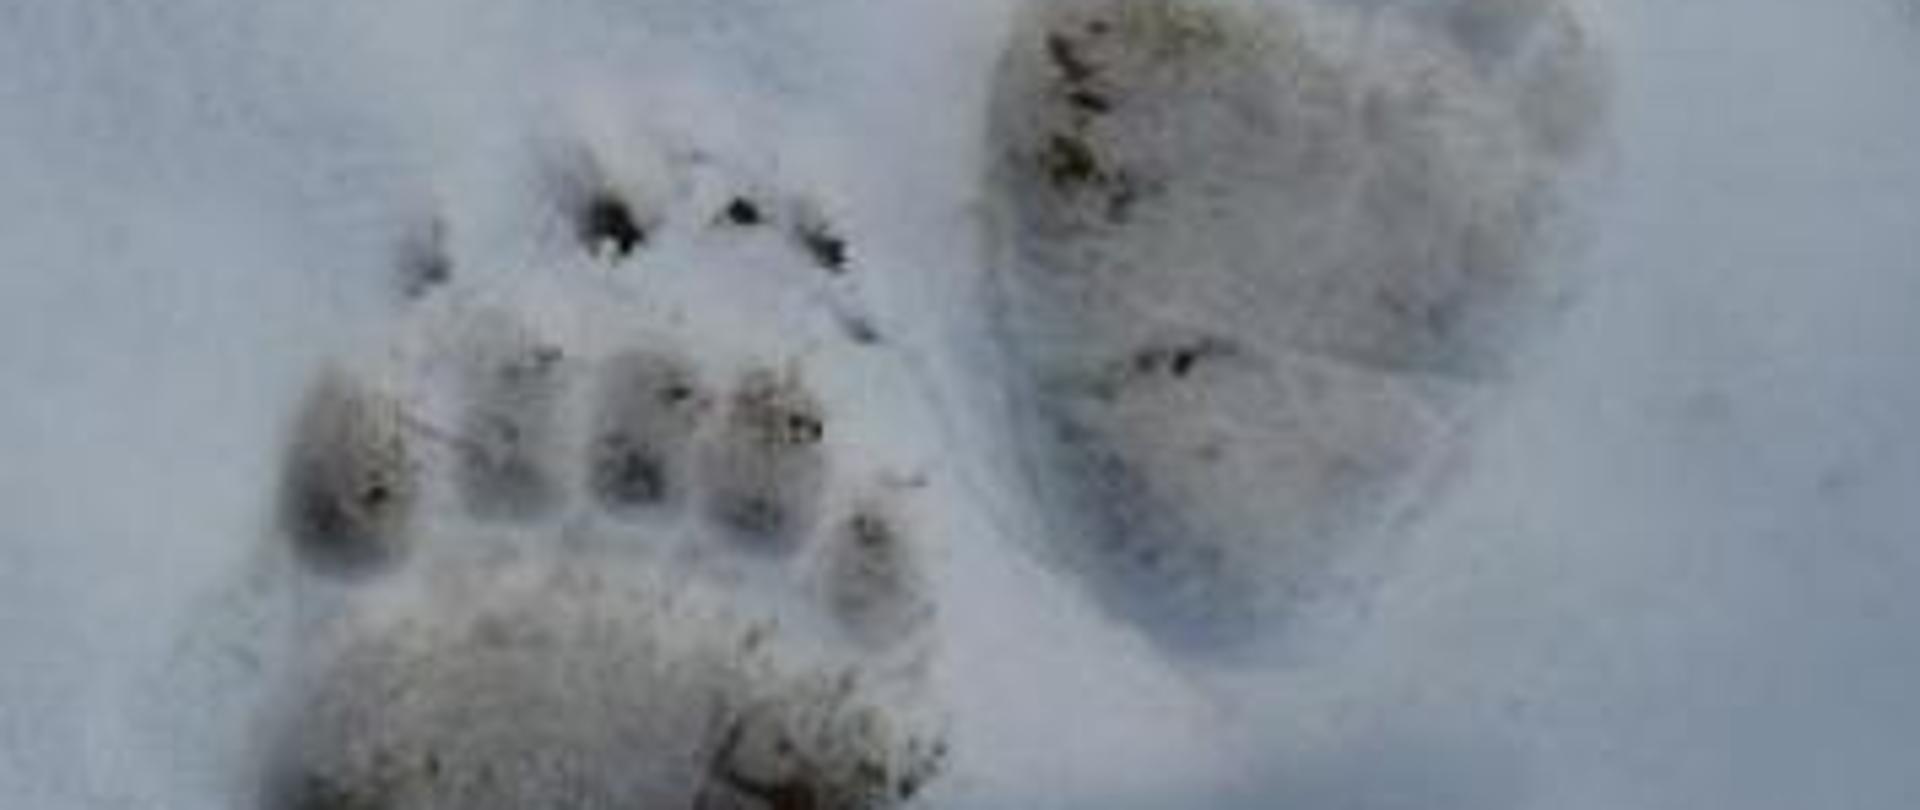 Tropy niedźwiedzia brunatnego Ursus arctos odbite na śniegu